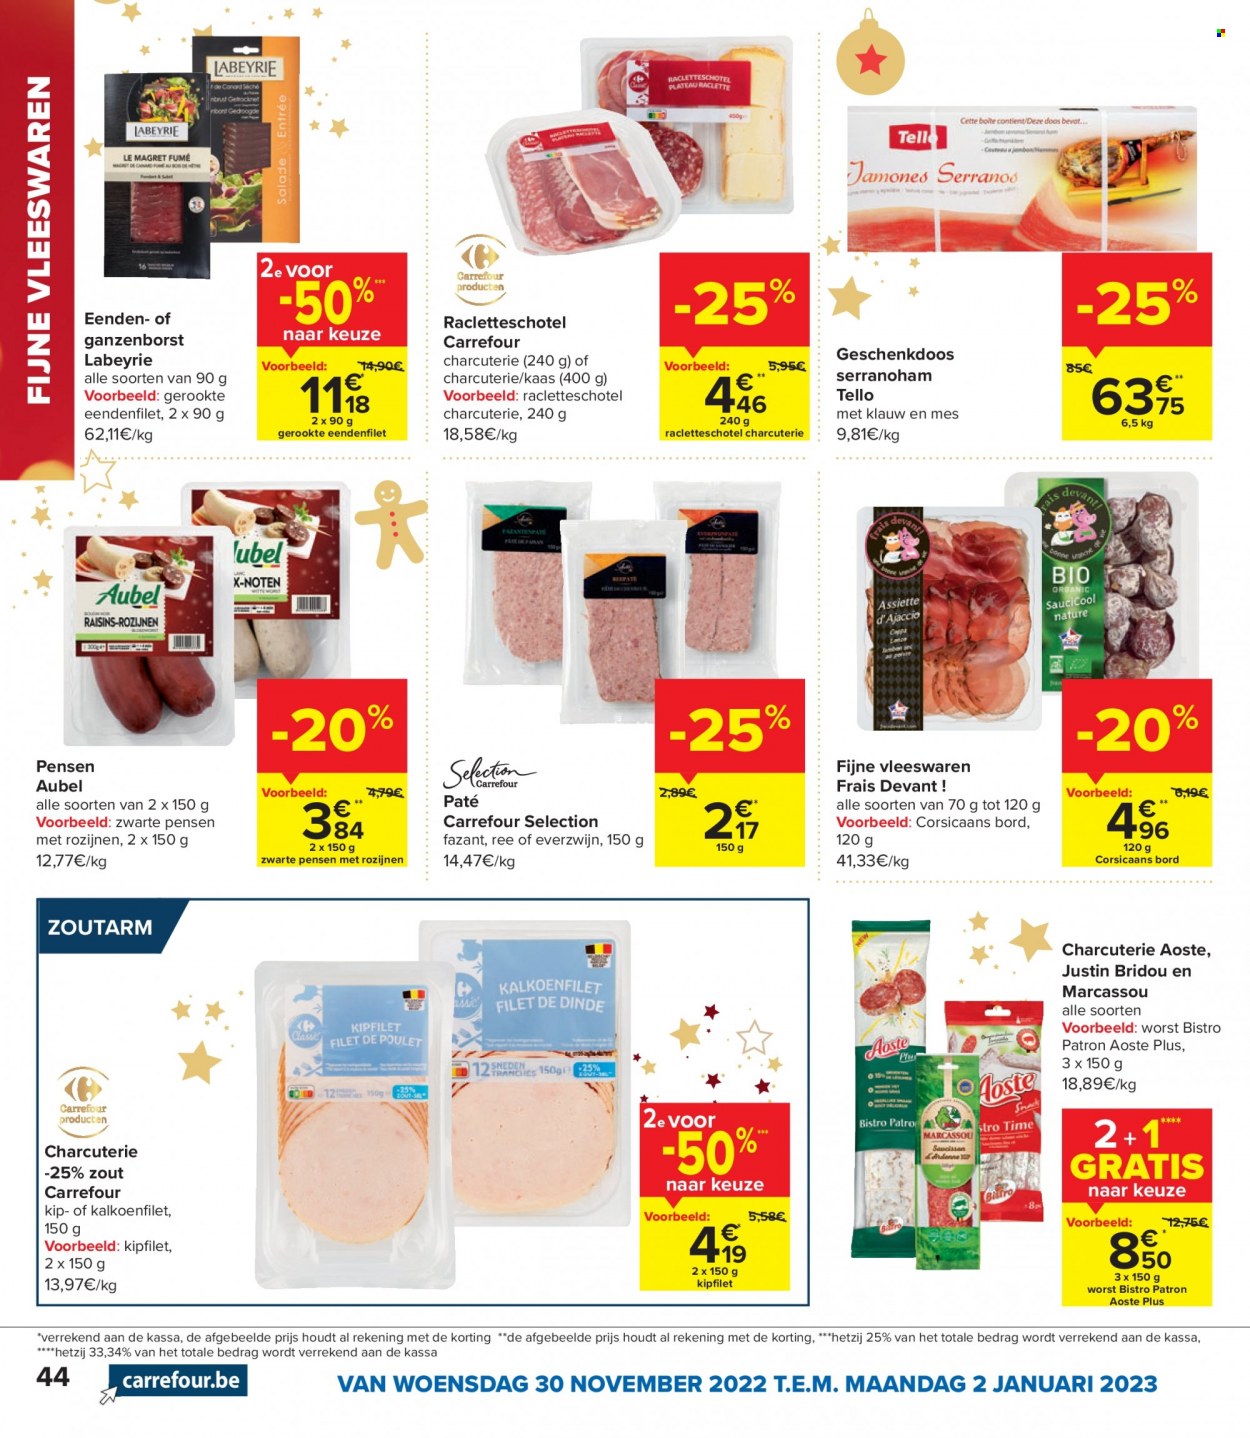 thumbnail - Carrefour-aanbieding - 30/11/2022 - 02/01/2023 -  producten in de aanbieding - kalkoenfilet, kipfilet, fazant, ham, serranoham, paté, kaas, rozijnen, messen. Pagina 44.